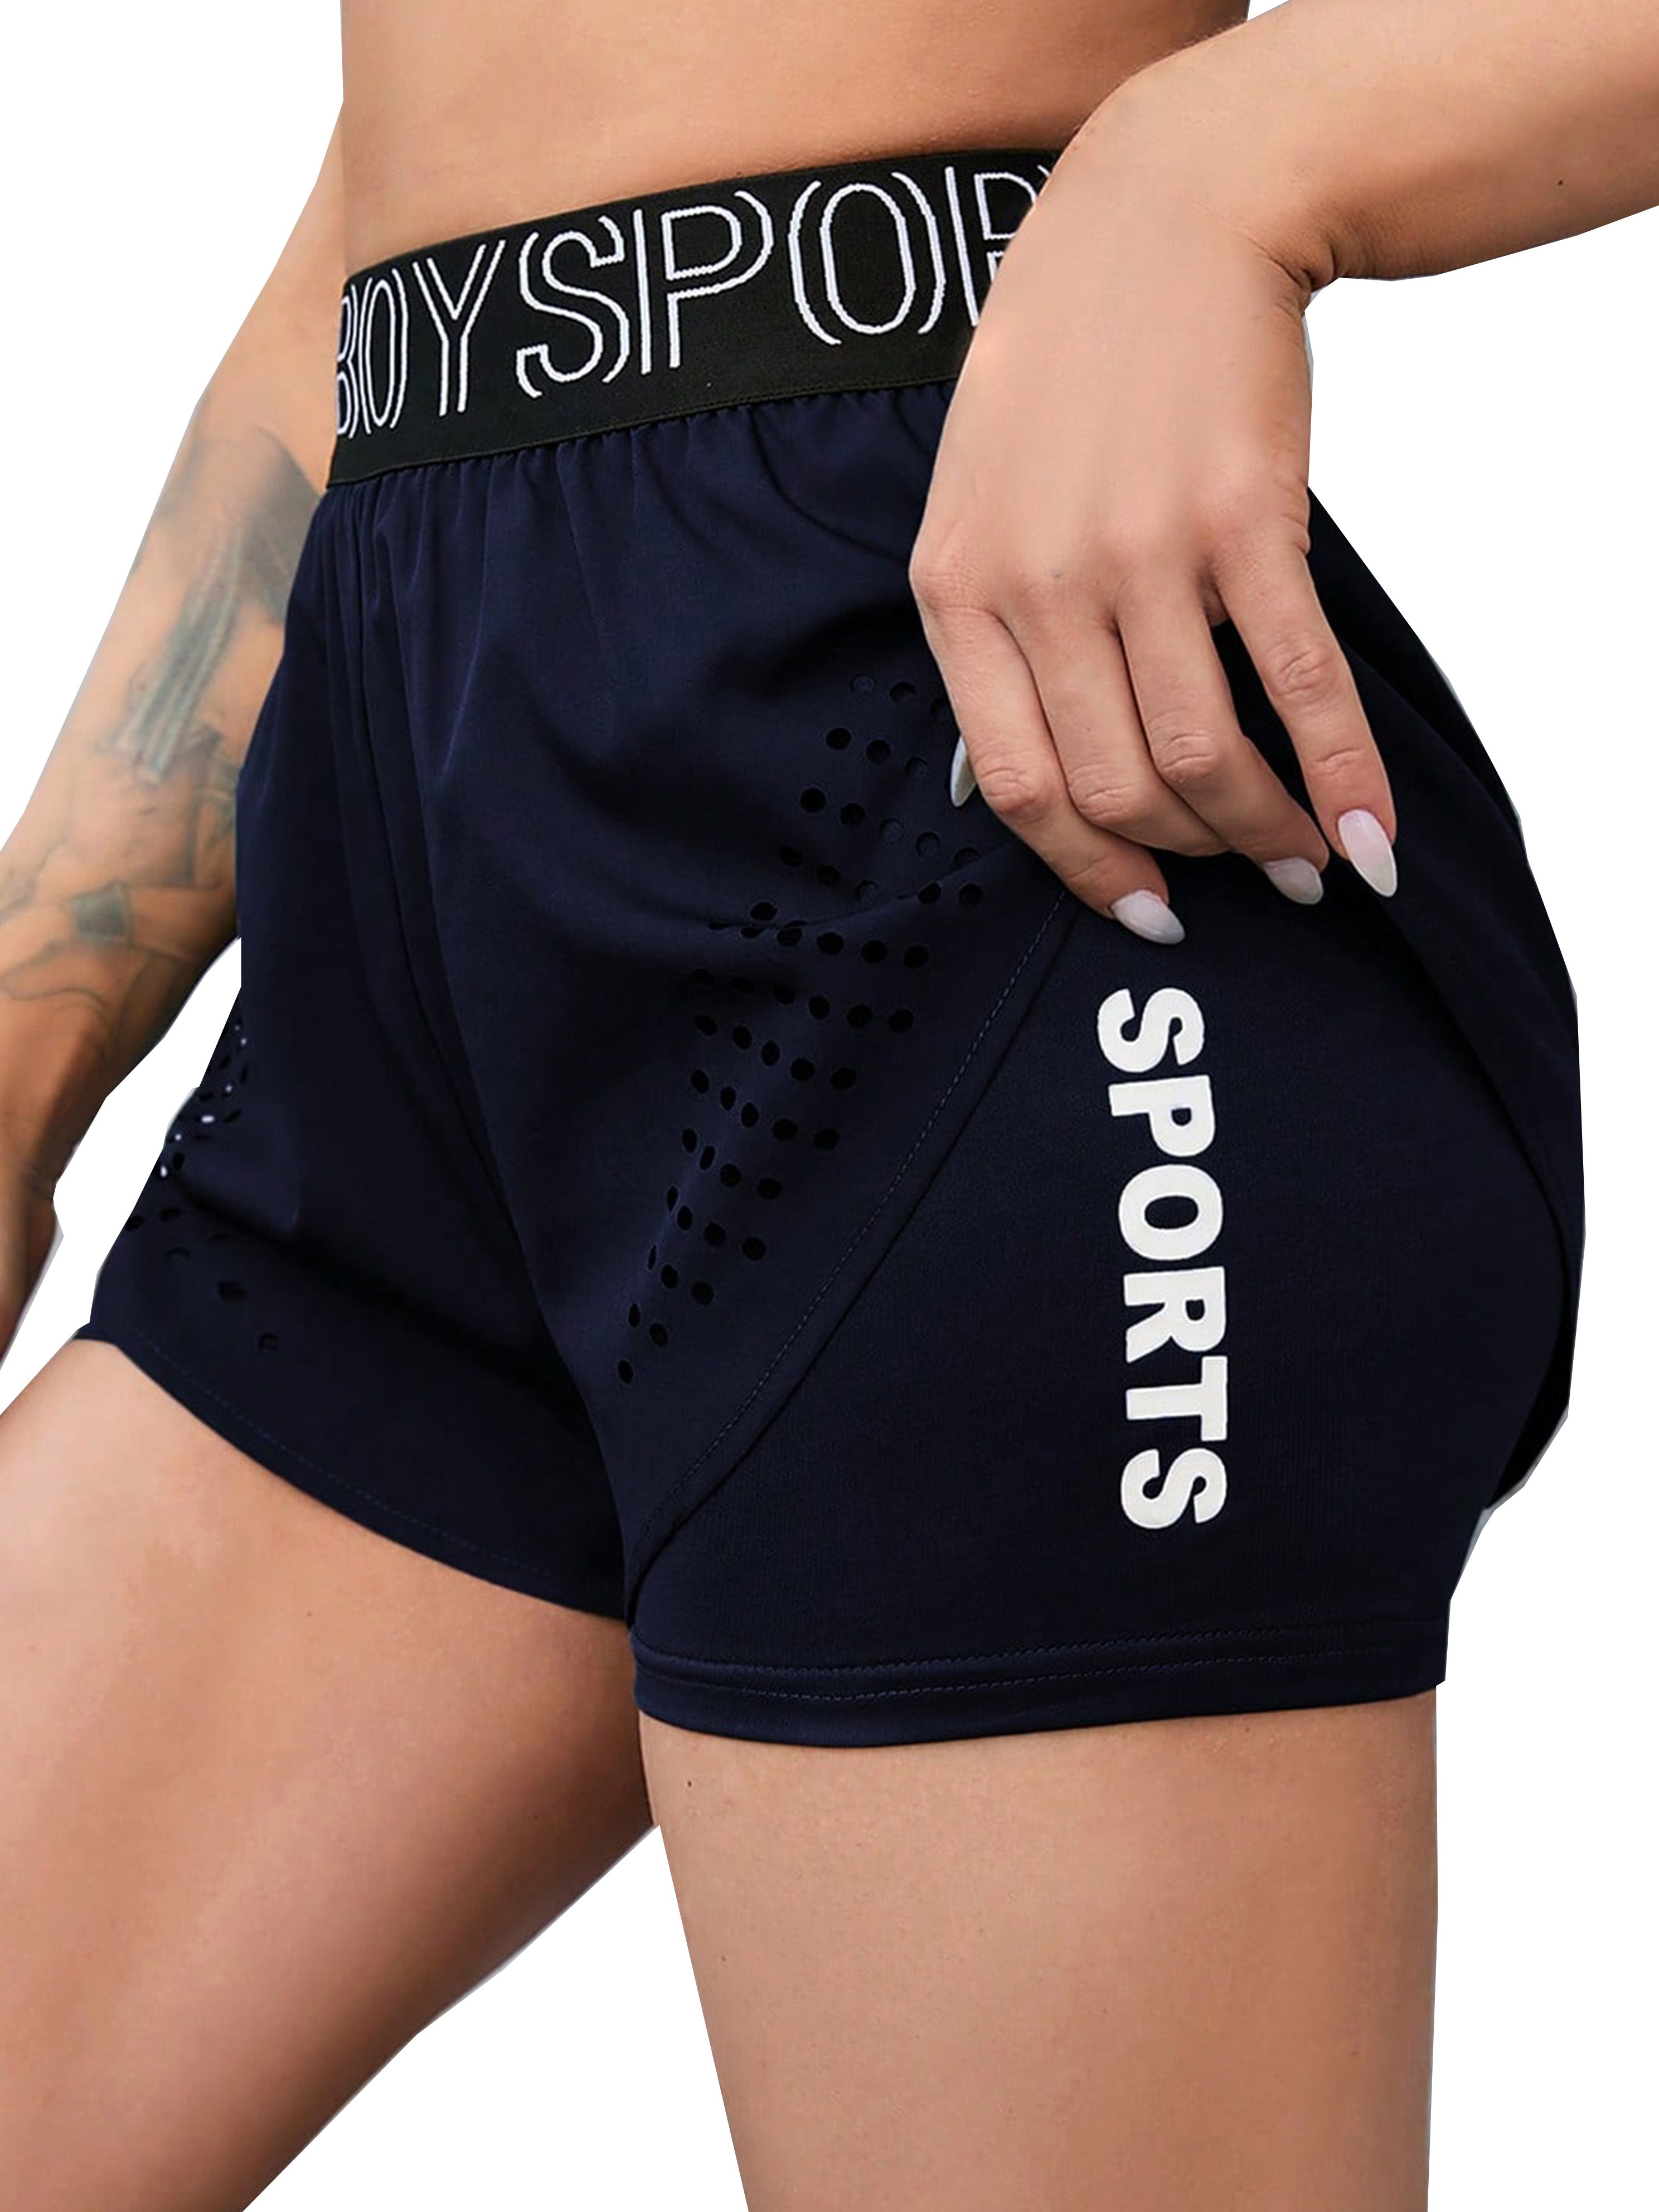 2pcs Girls High Elastic Shorts Tight Fit Cropped Skinny Pants Sports Bike  Yoga Shorts